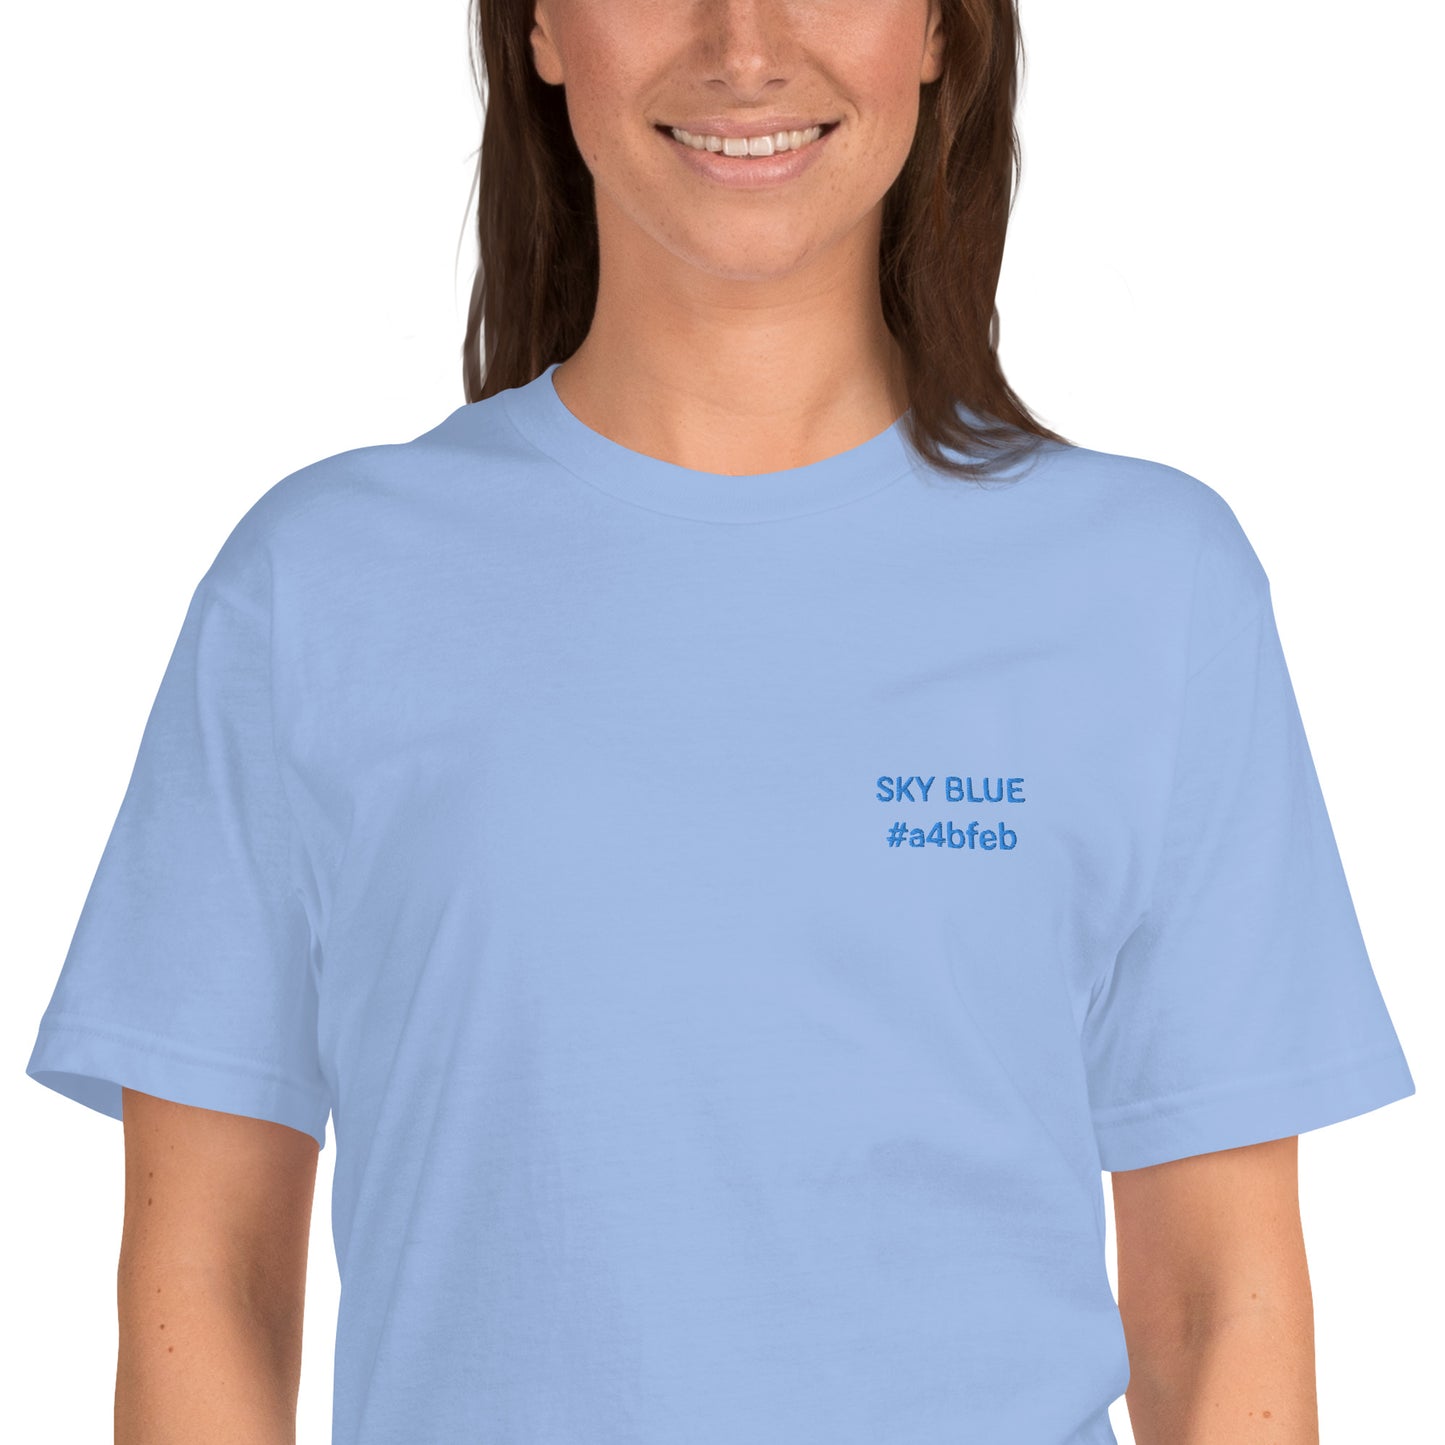 OKKL SKY BLUE #a4bfeb T-shirt